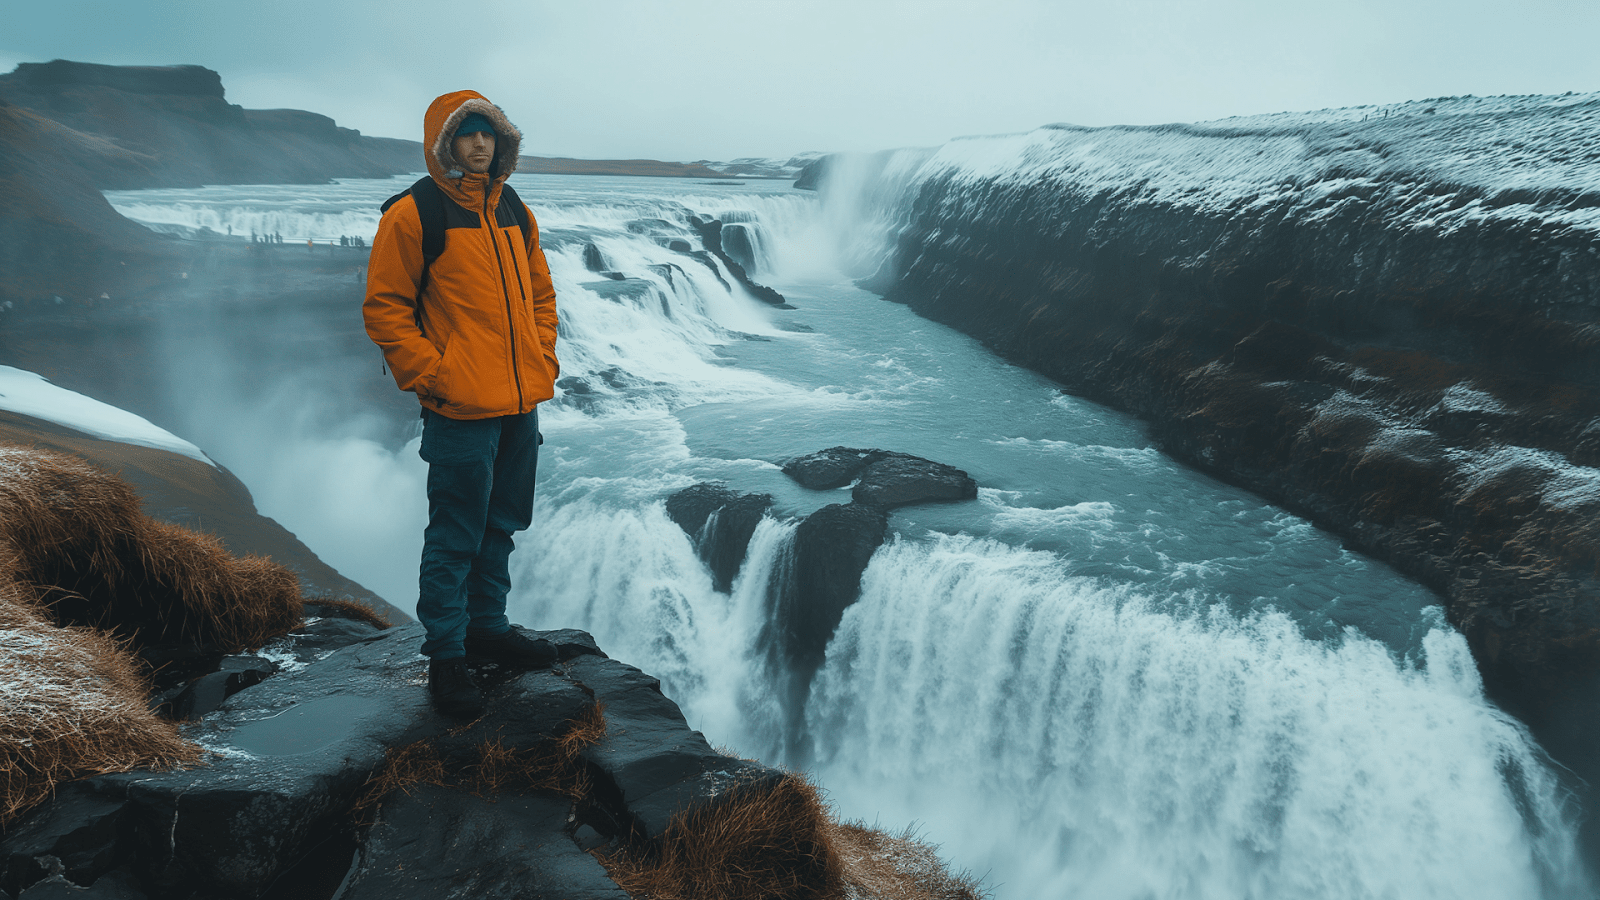 Adventurer in orange gazes at a powerful Icelandic waterfall